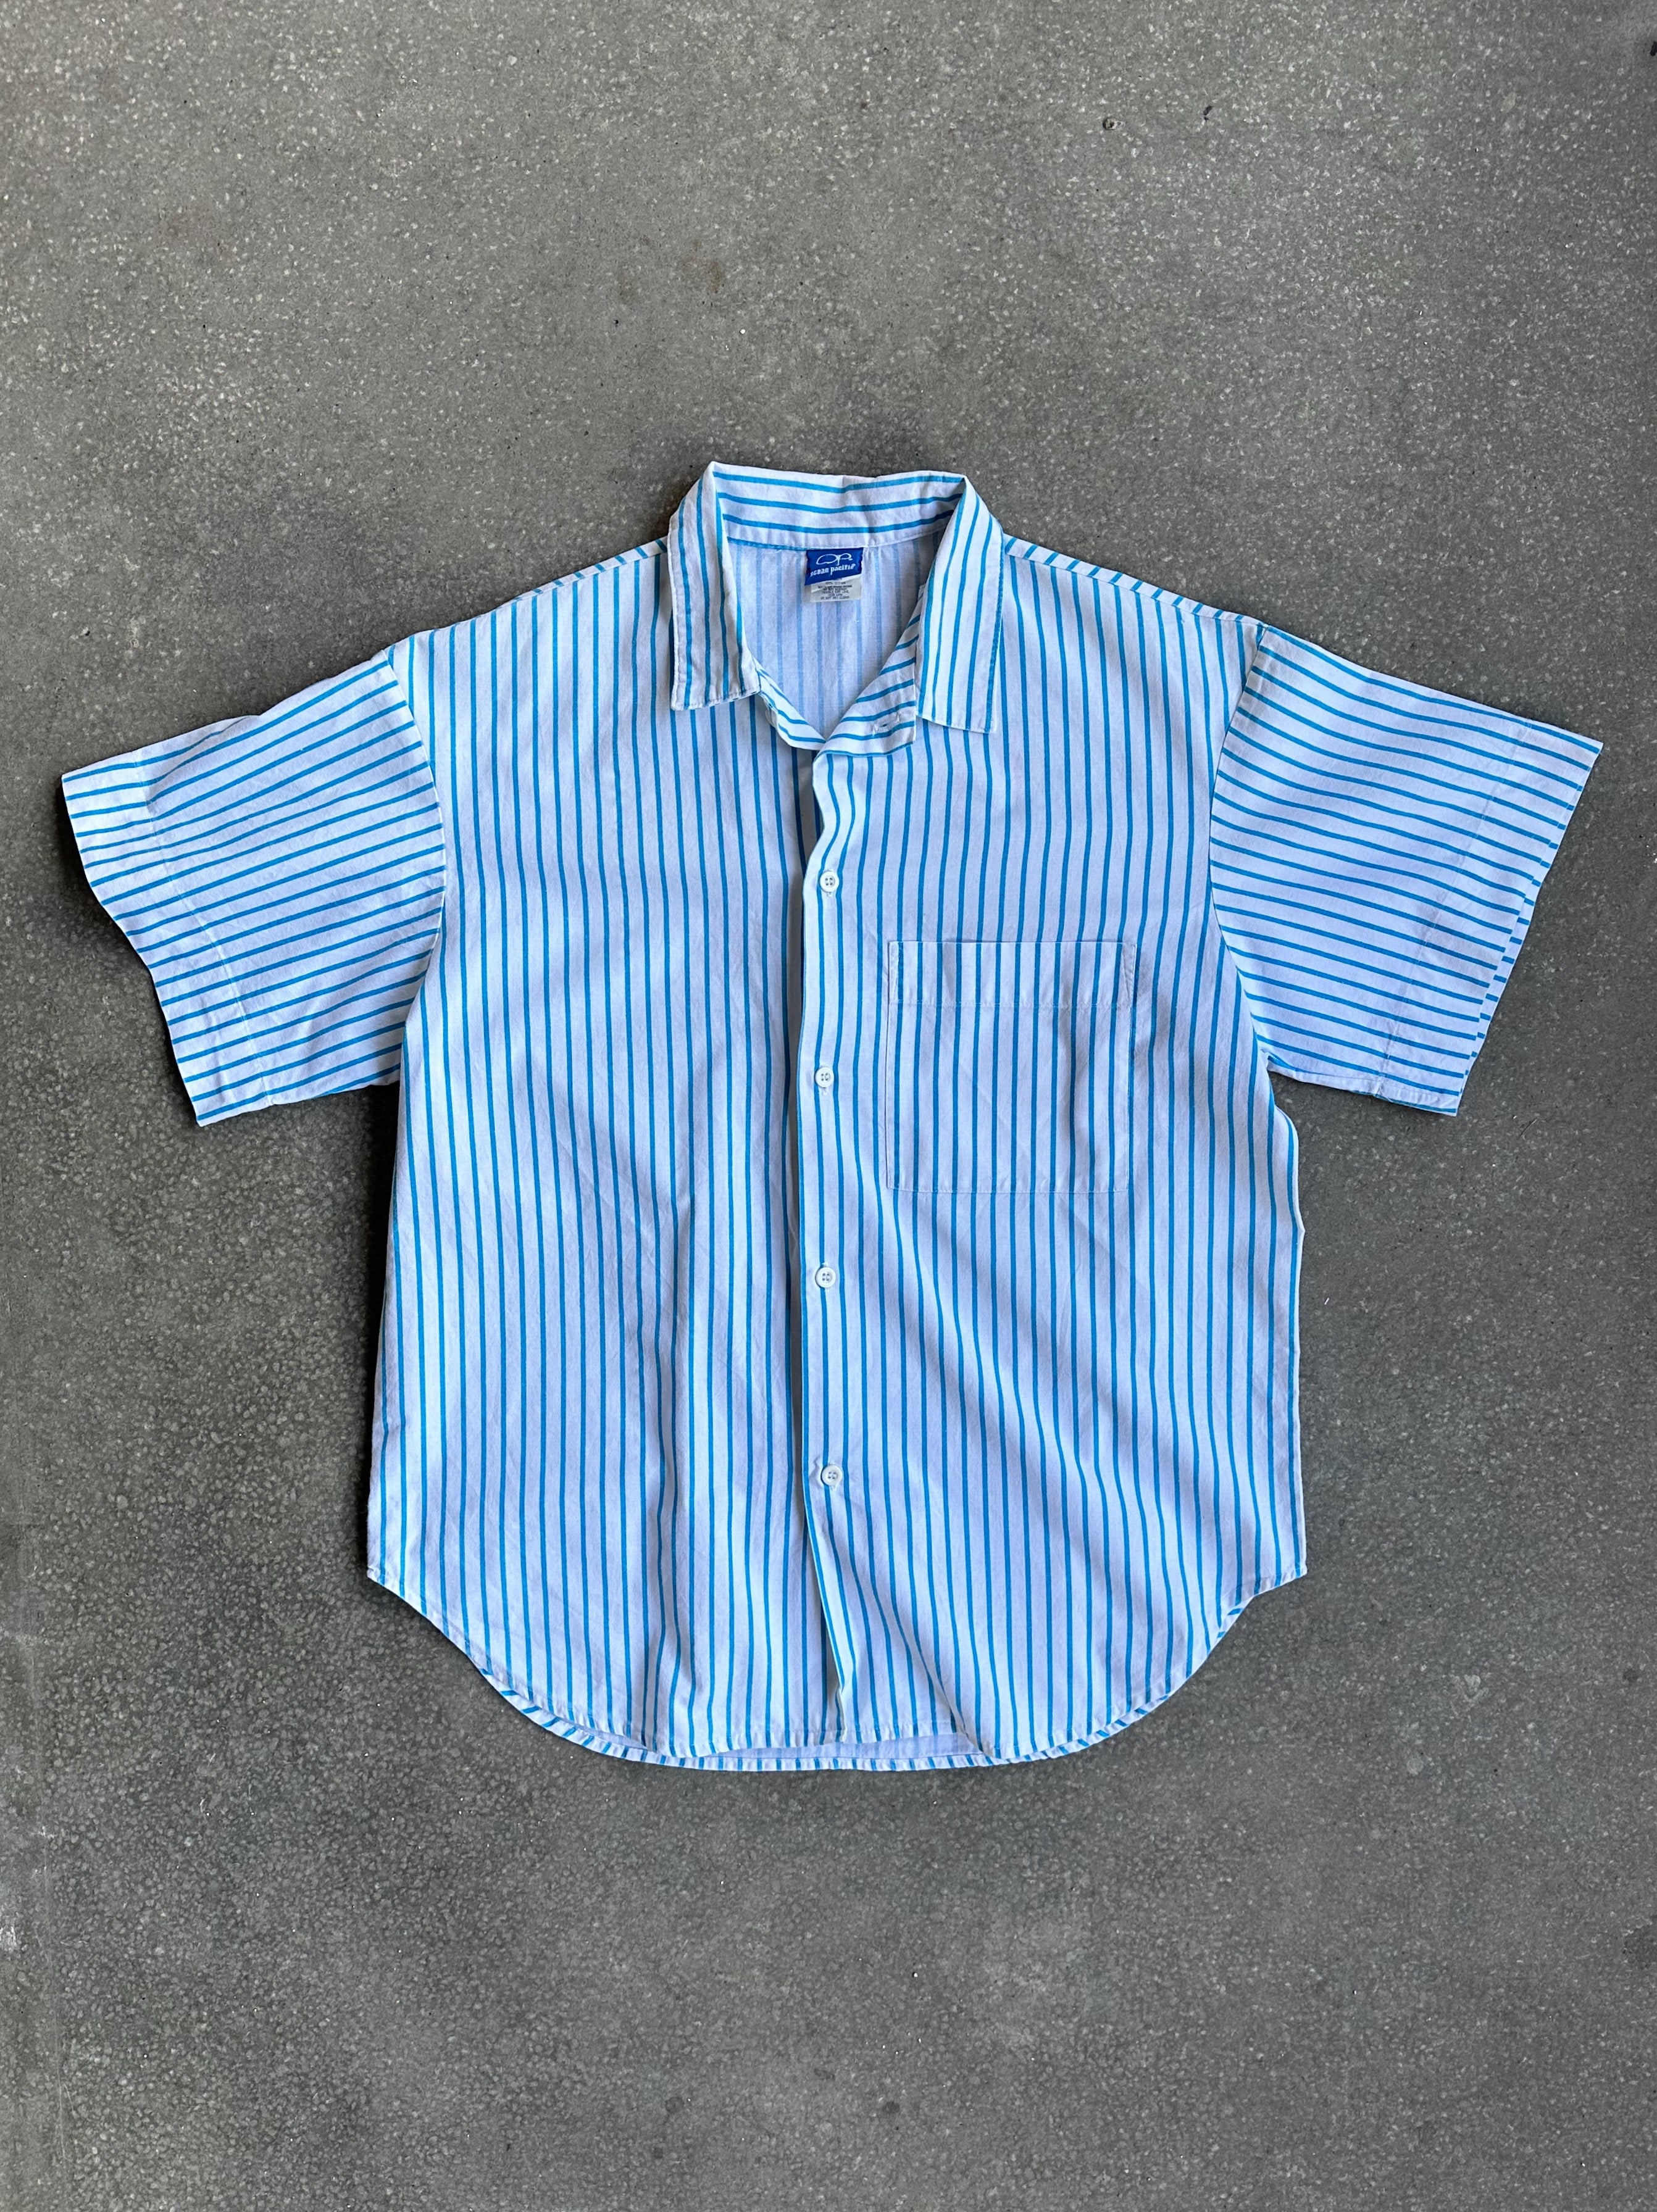 Vintage 1986 Made in USA Ocean Pacific Shirt - Medium